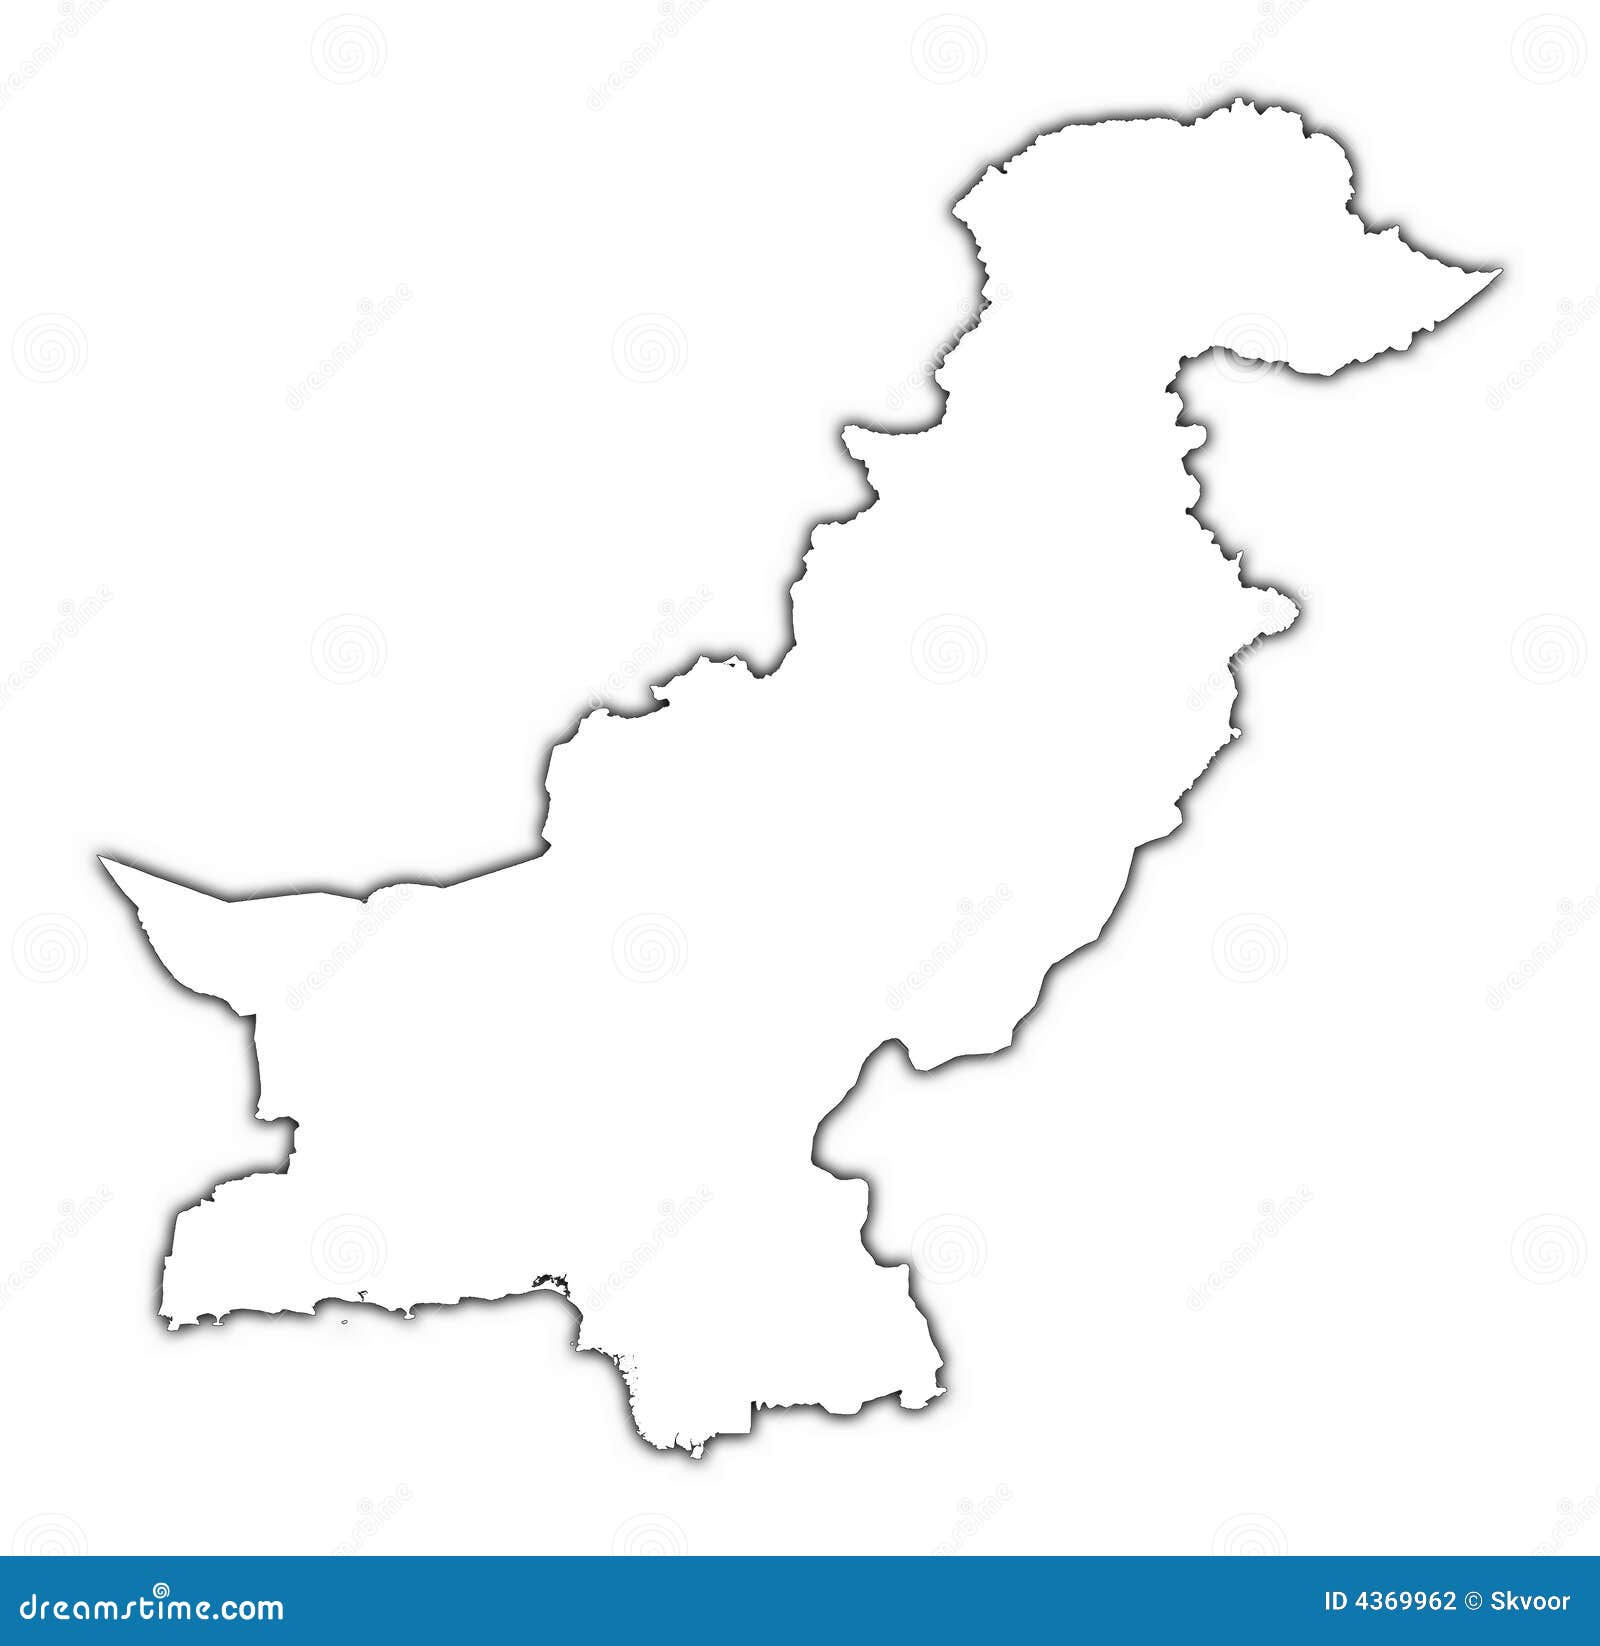 clipart of pakistan map - photo #8